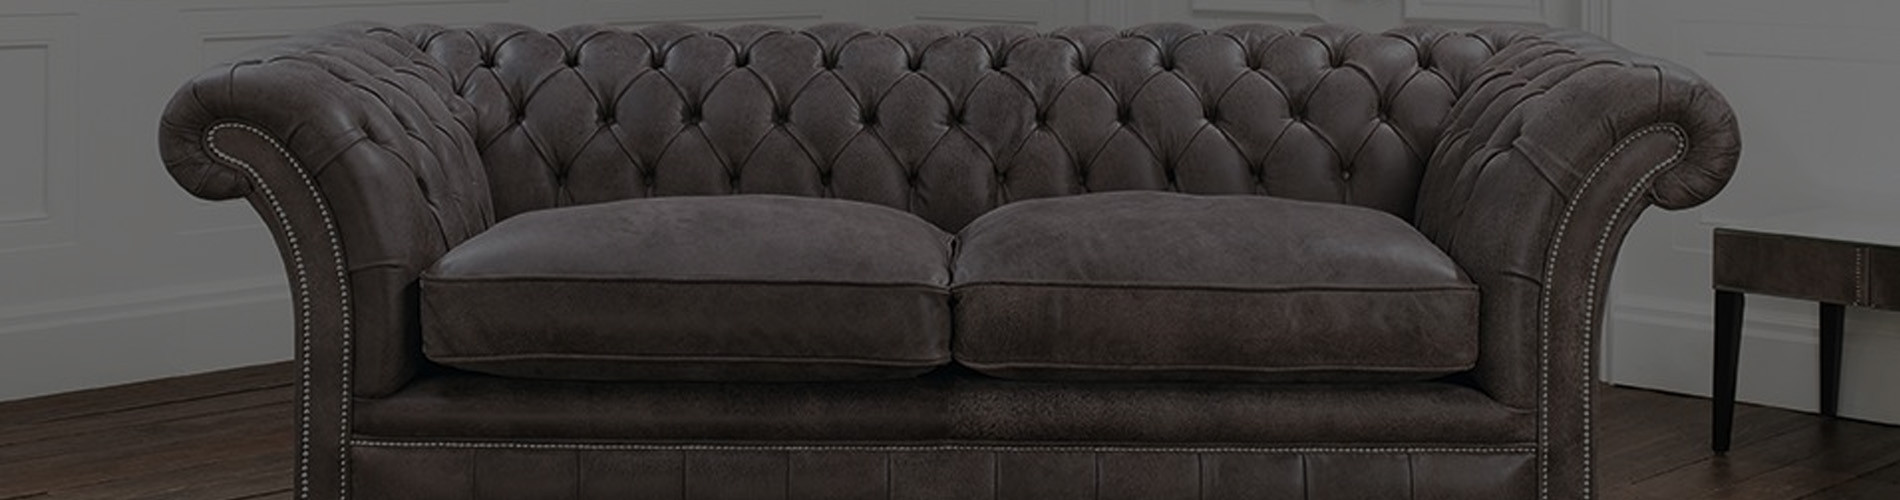 Luxury Handmade Chesterfield Sofas | Living Room Sofas